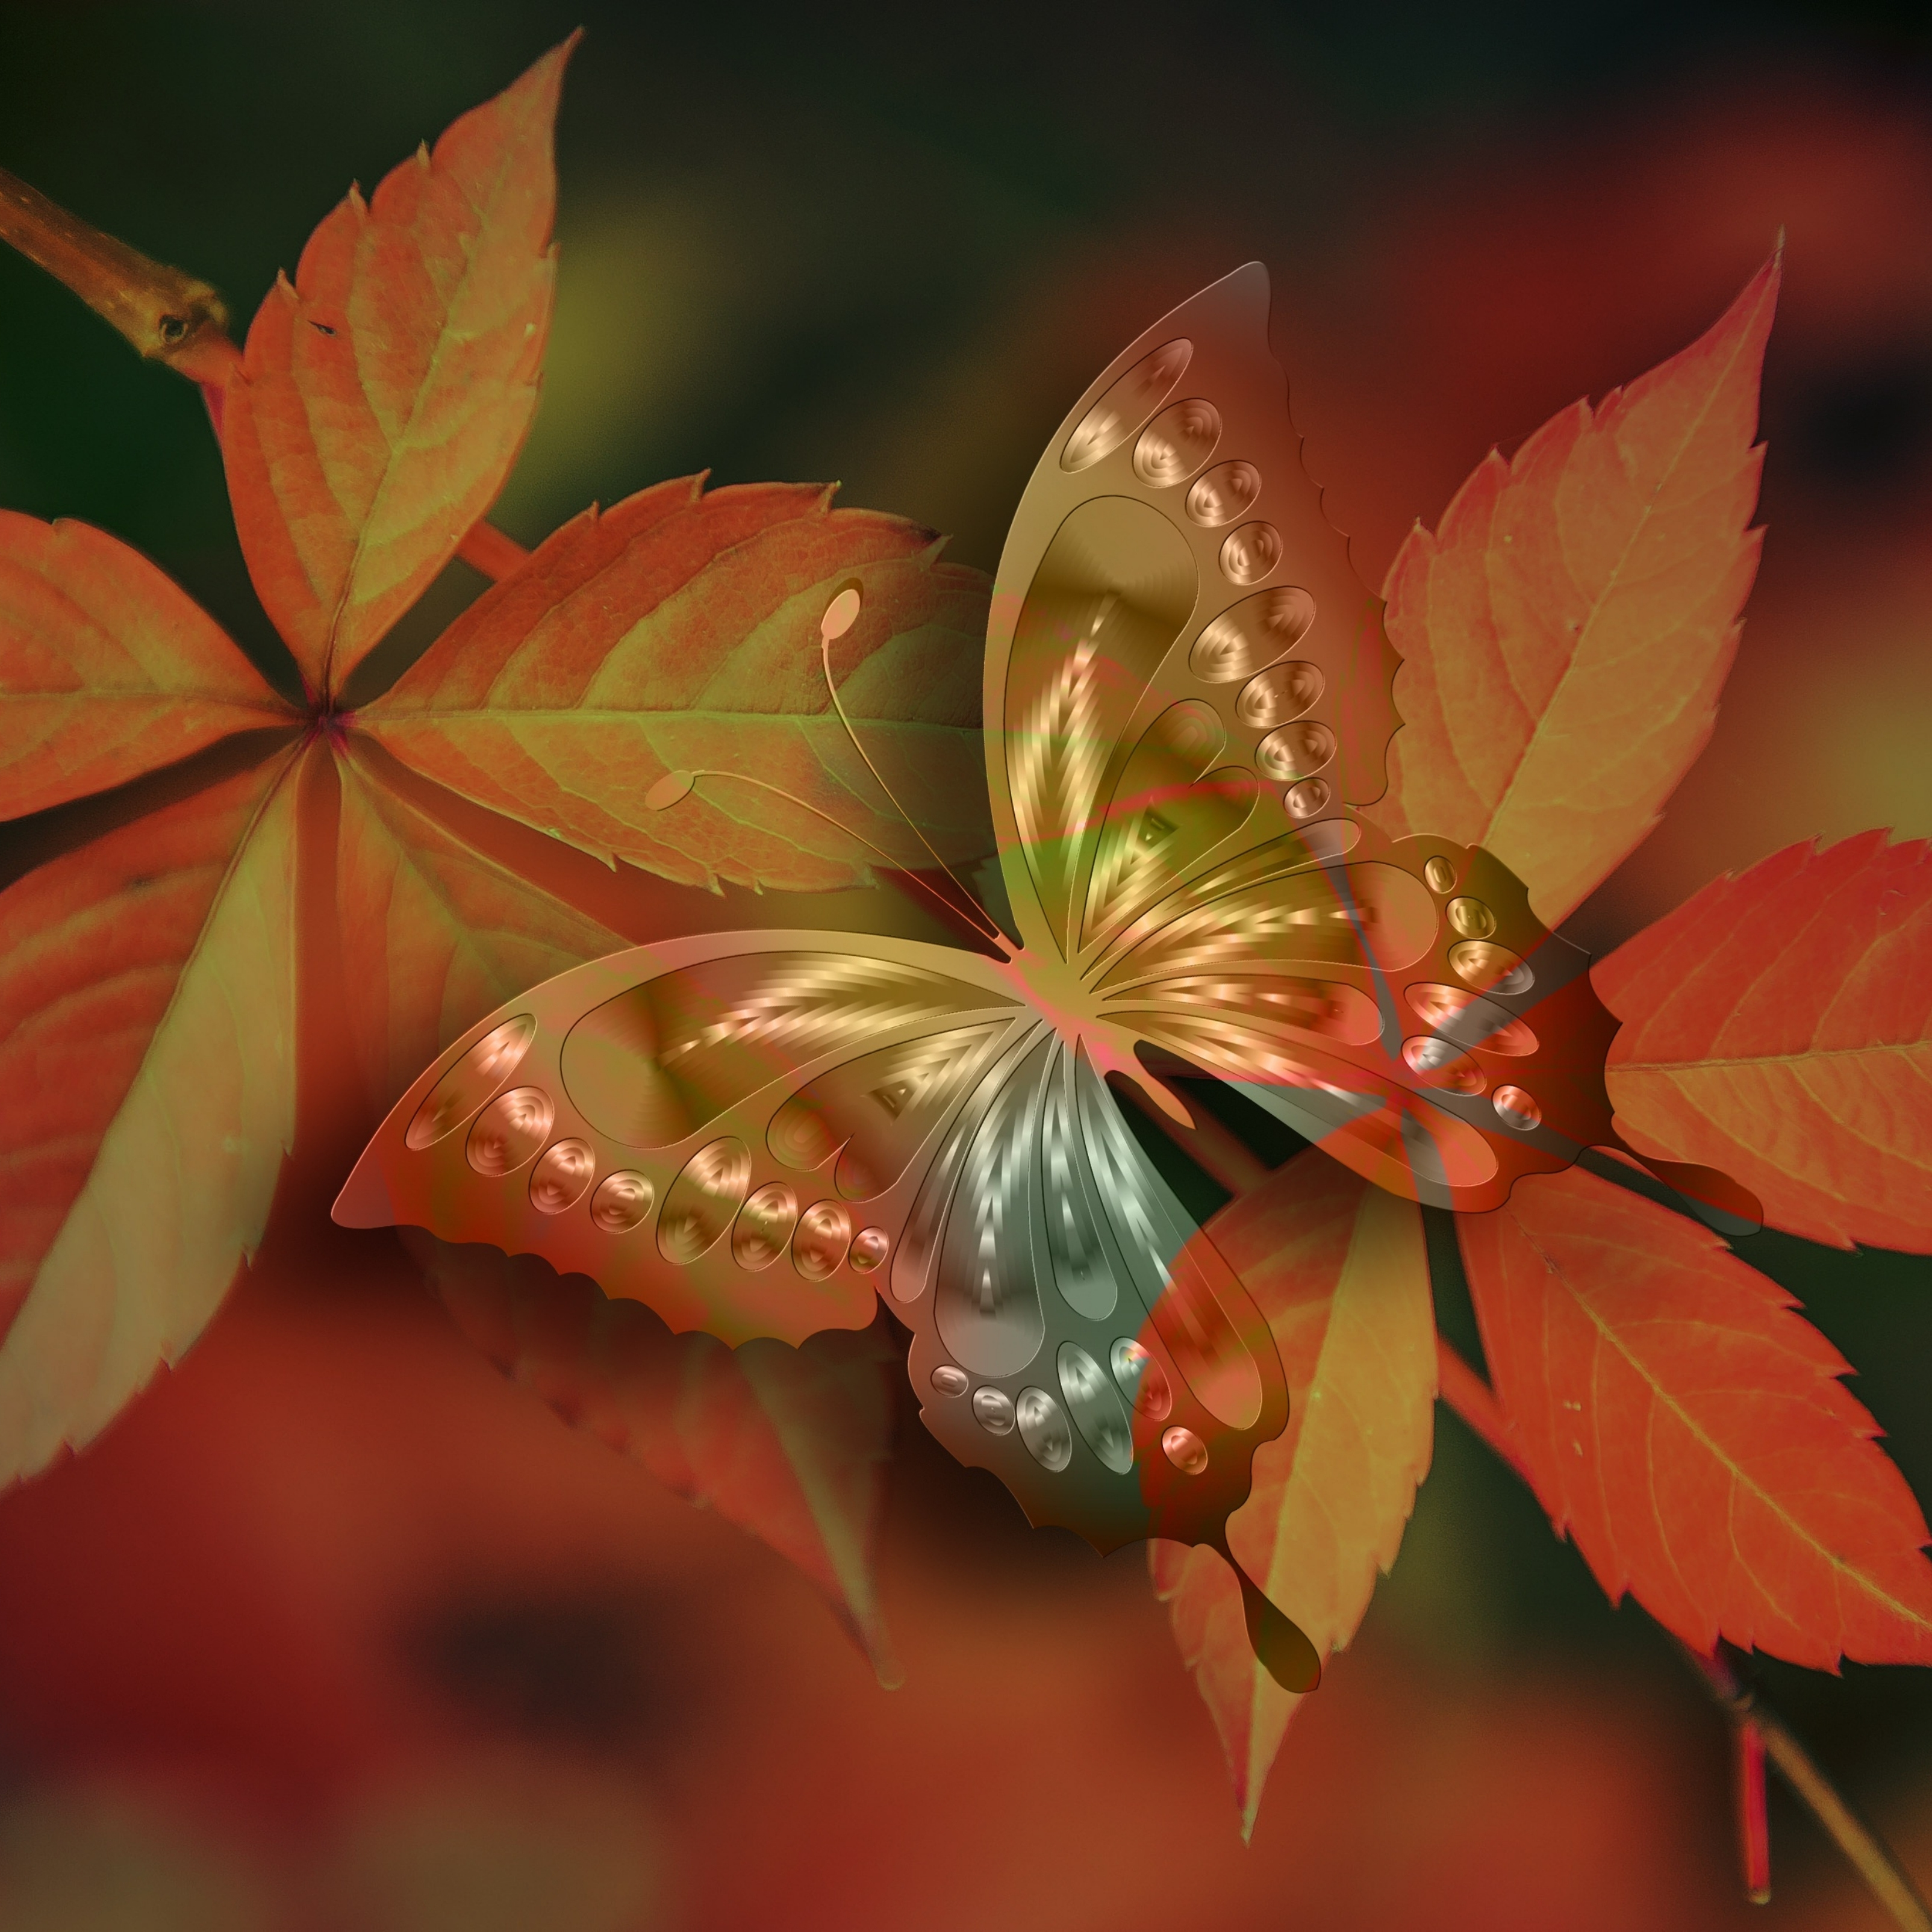 Autumn Orange Fall Leaf Macro iPad Air Wallpapers Free Download